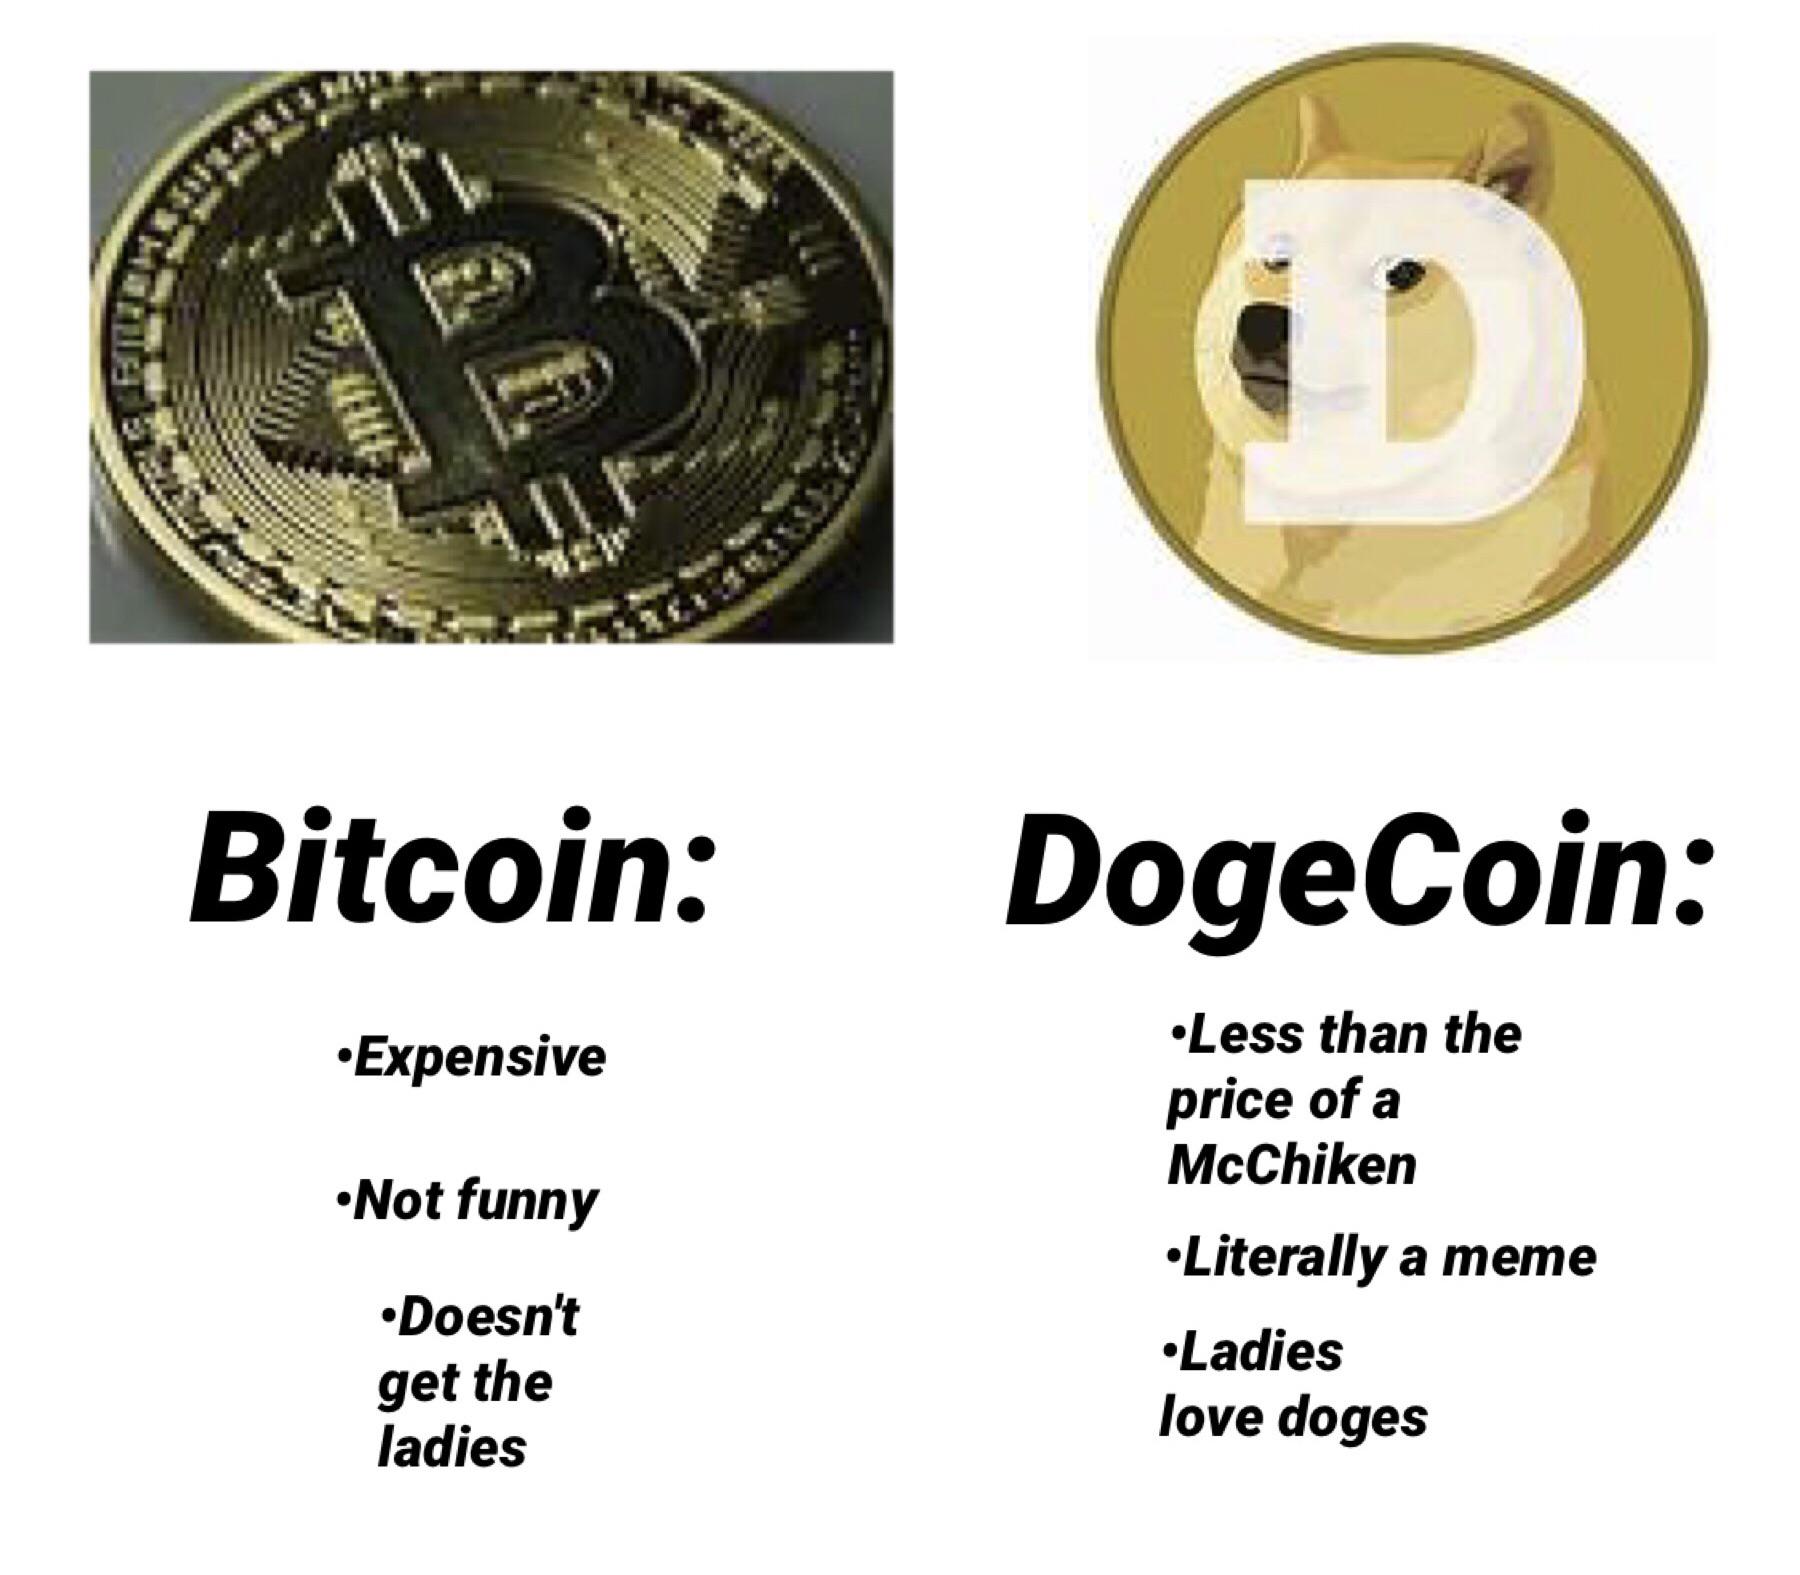 DOGE to BTC Exchange | Swap Dogecoin to Bitcoin online - LetsExchange